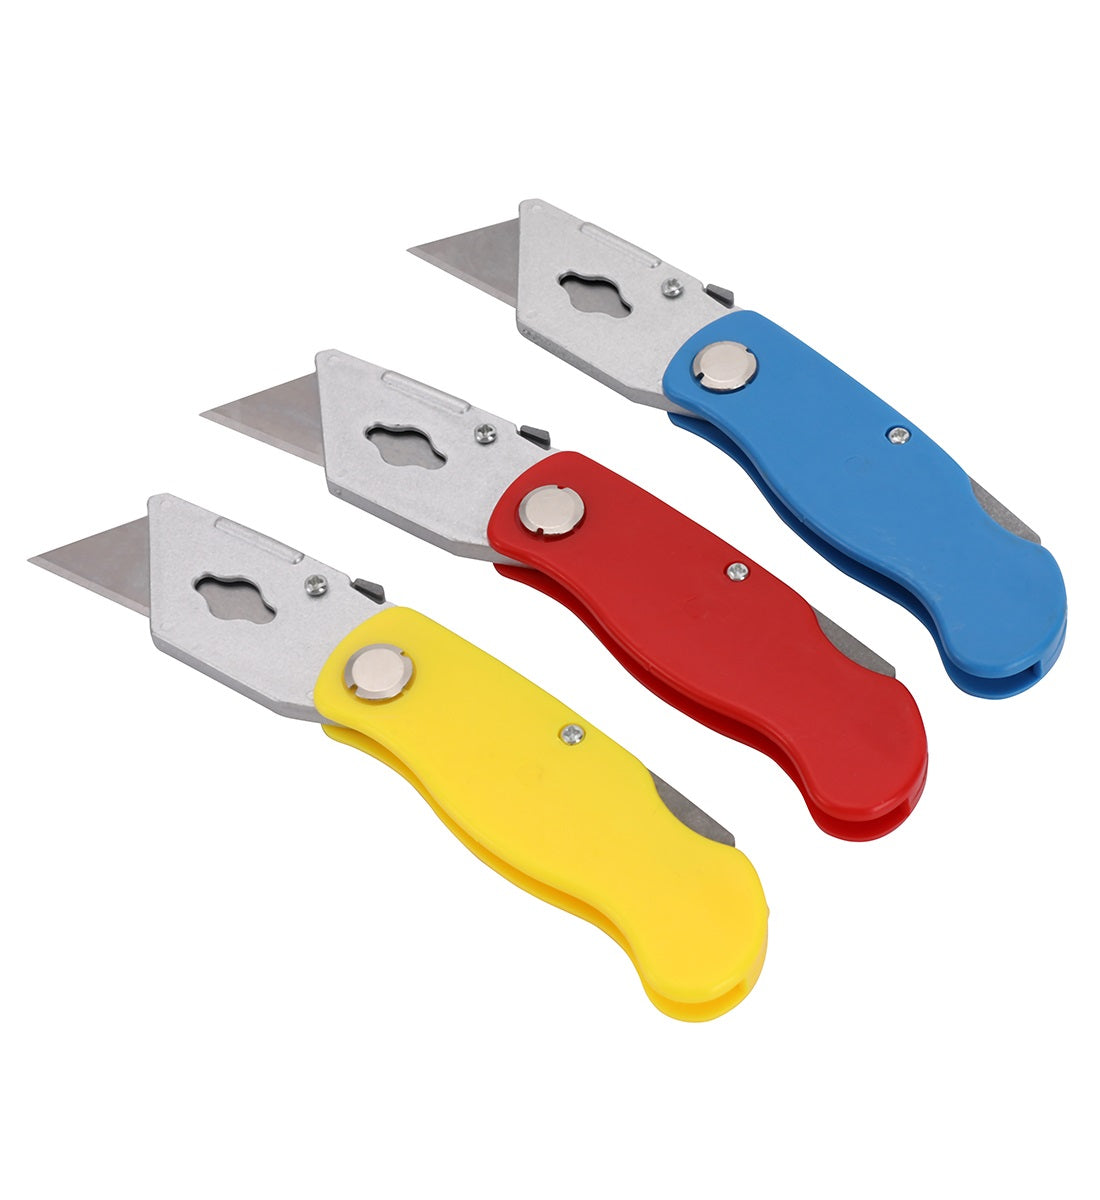 5-in-1 Foldable Knife Set